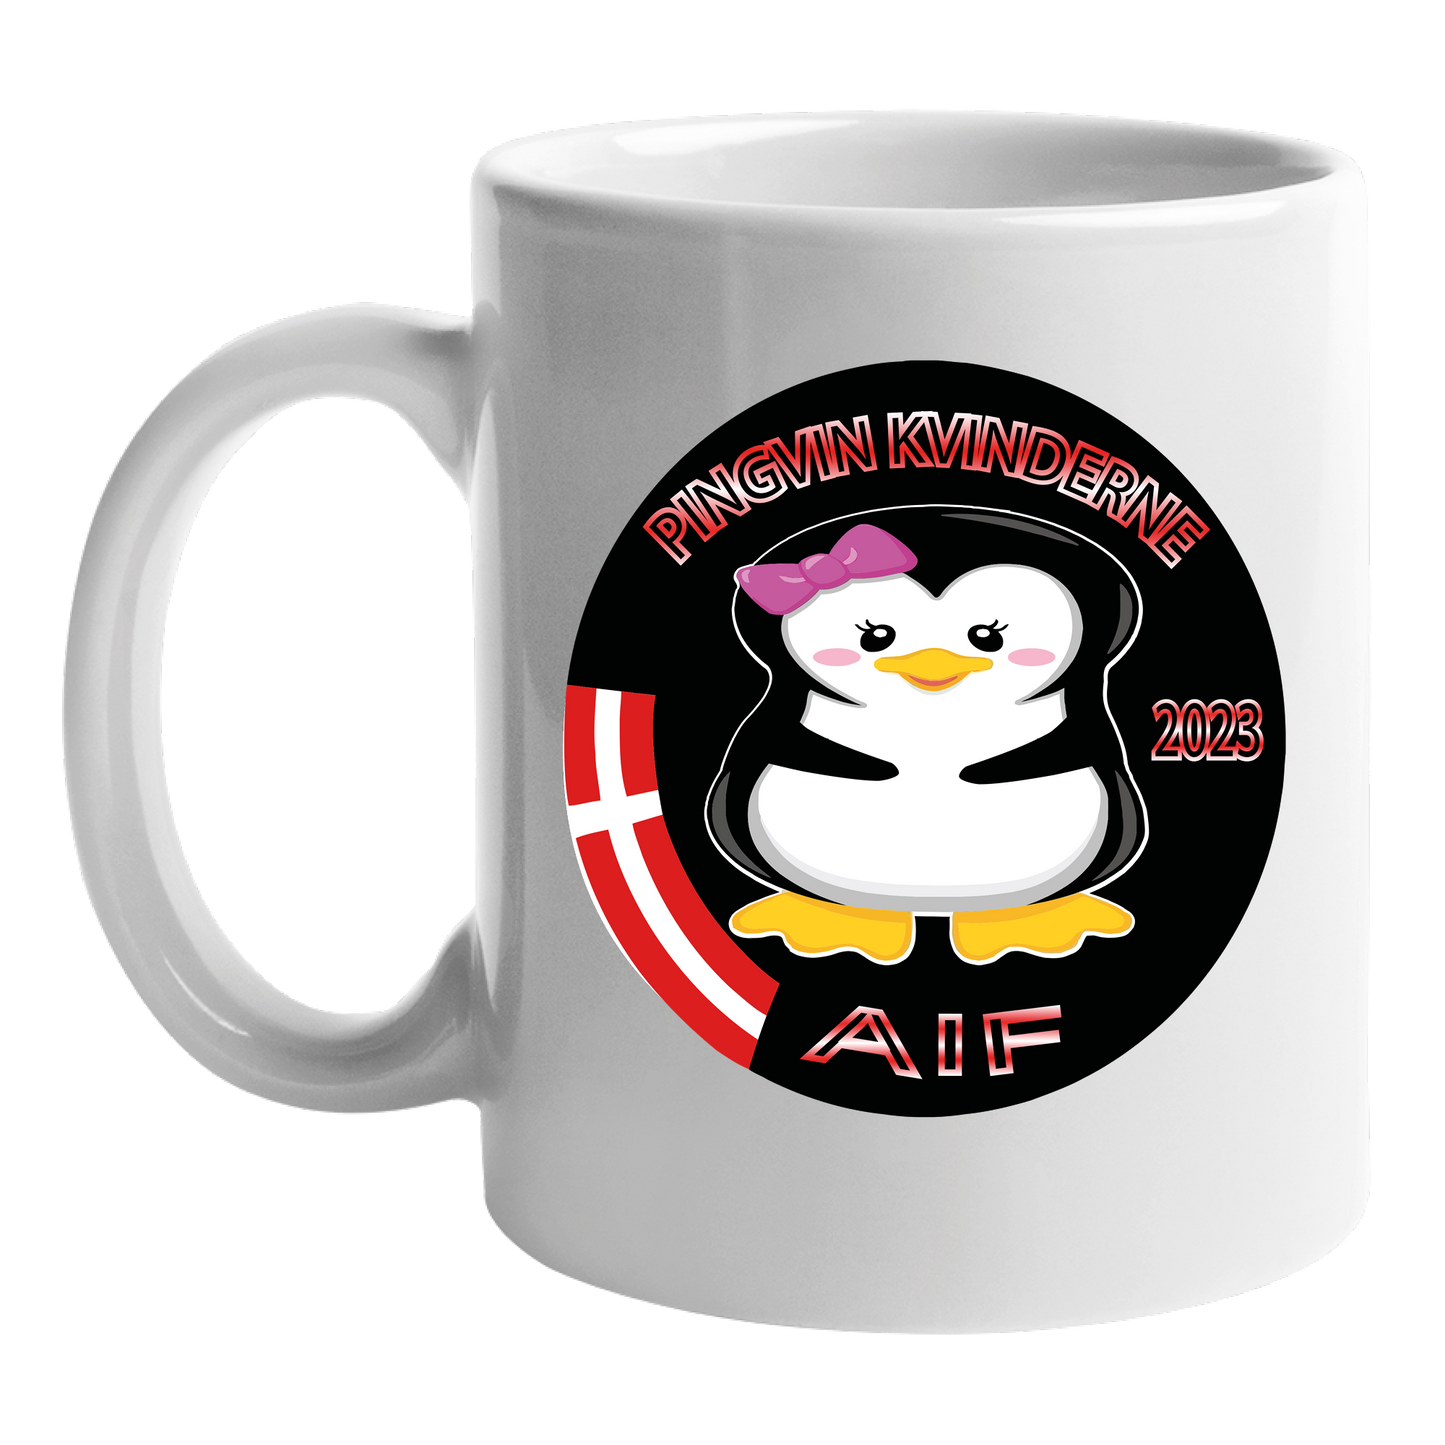 Kop med klub logo - pingvin kvinderne